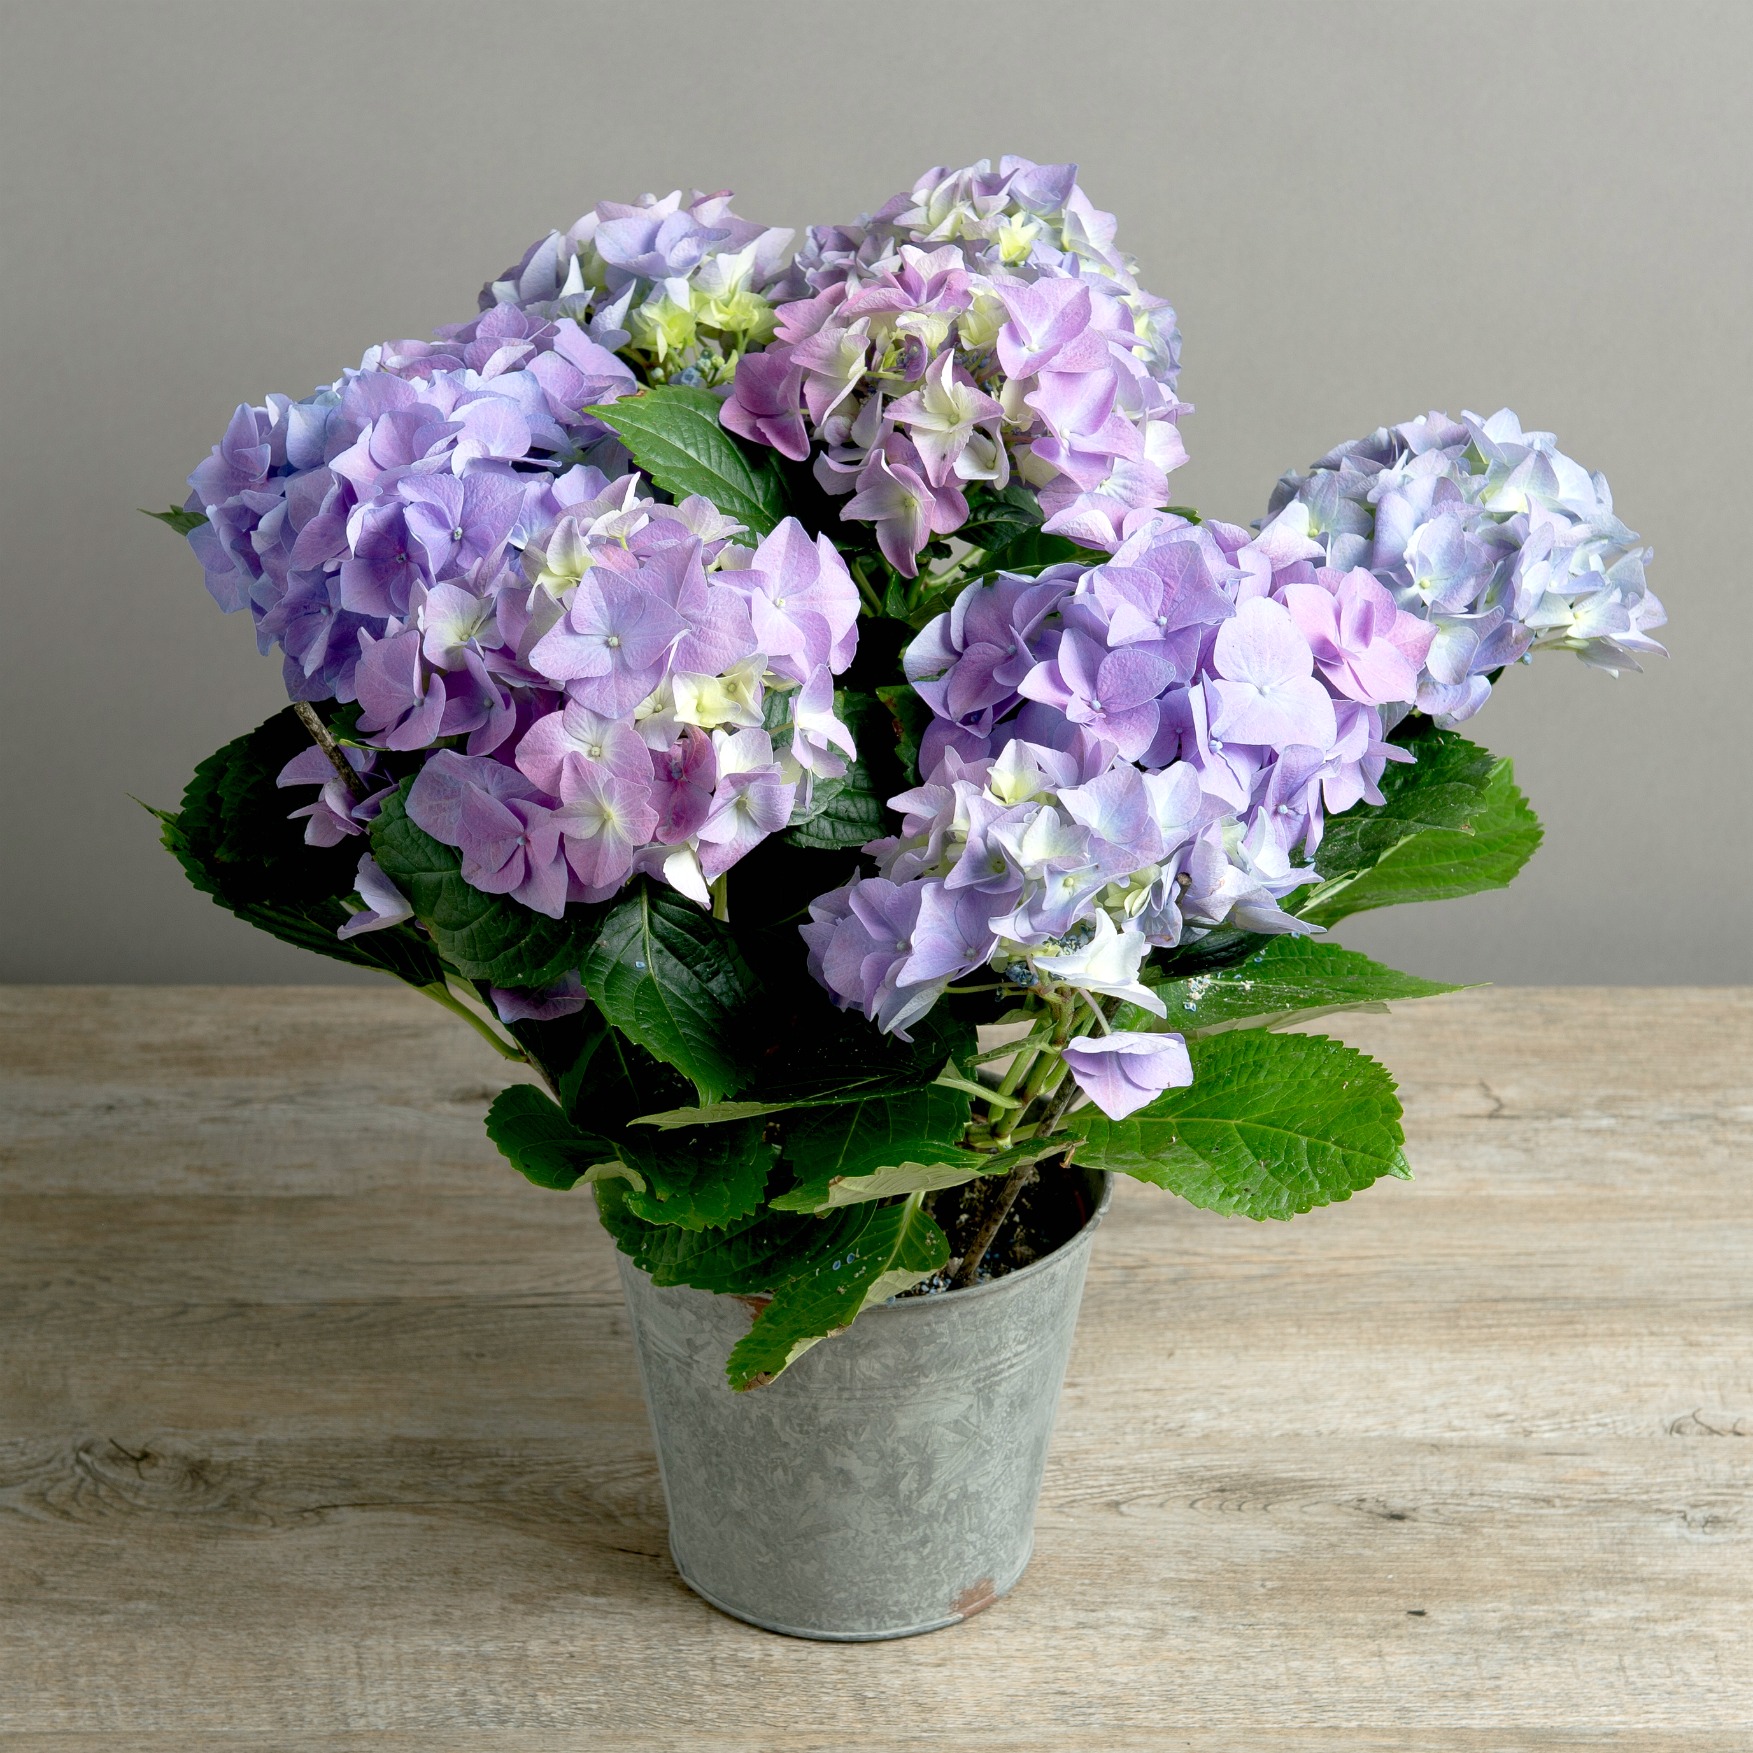 hydrangea plant blue flower flowers pot sky vintage style spring